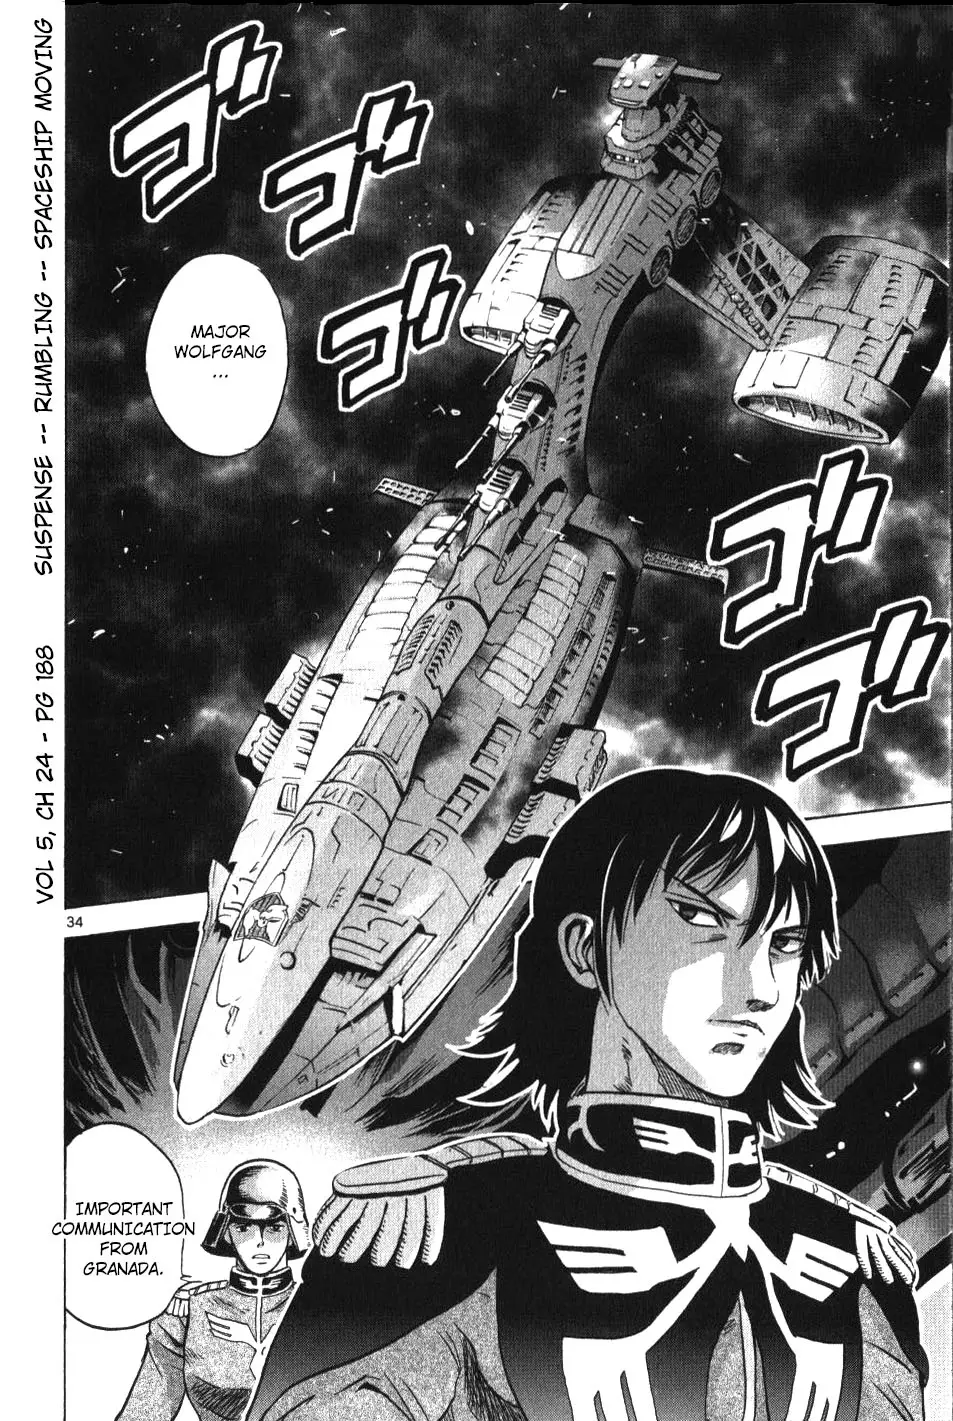 Mobile Suit Gundam Aggressor - 24 page 31-00e43e3c